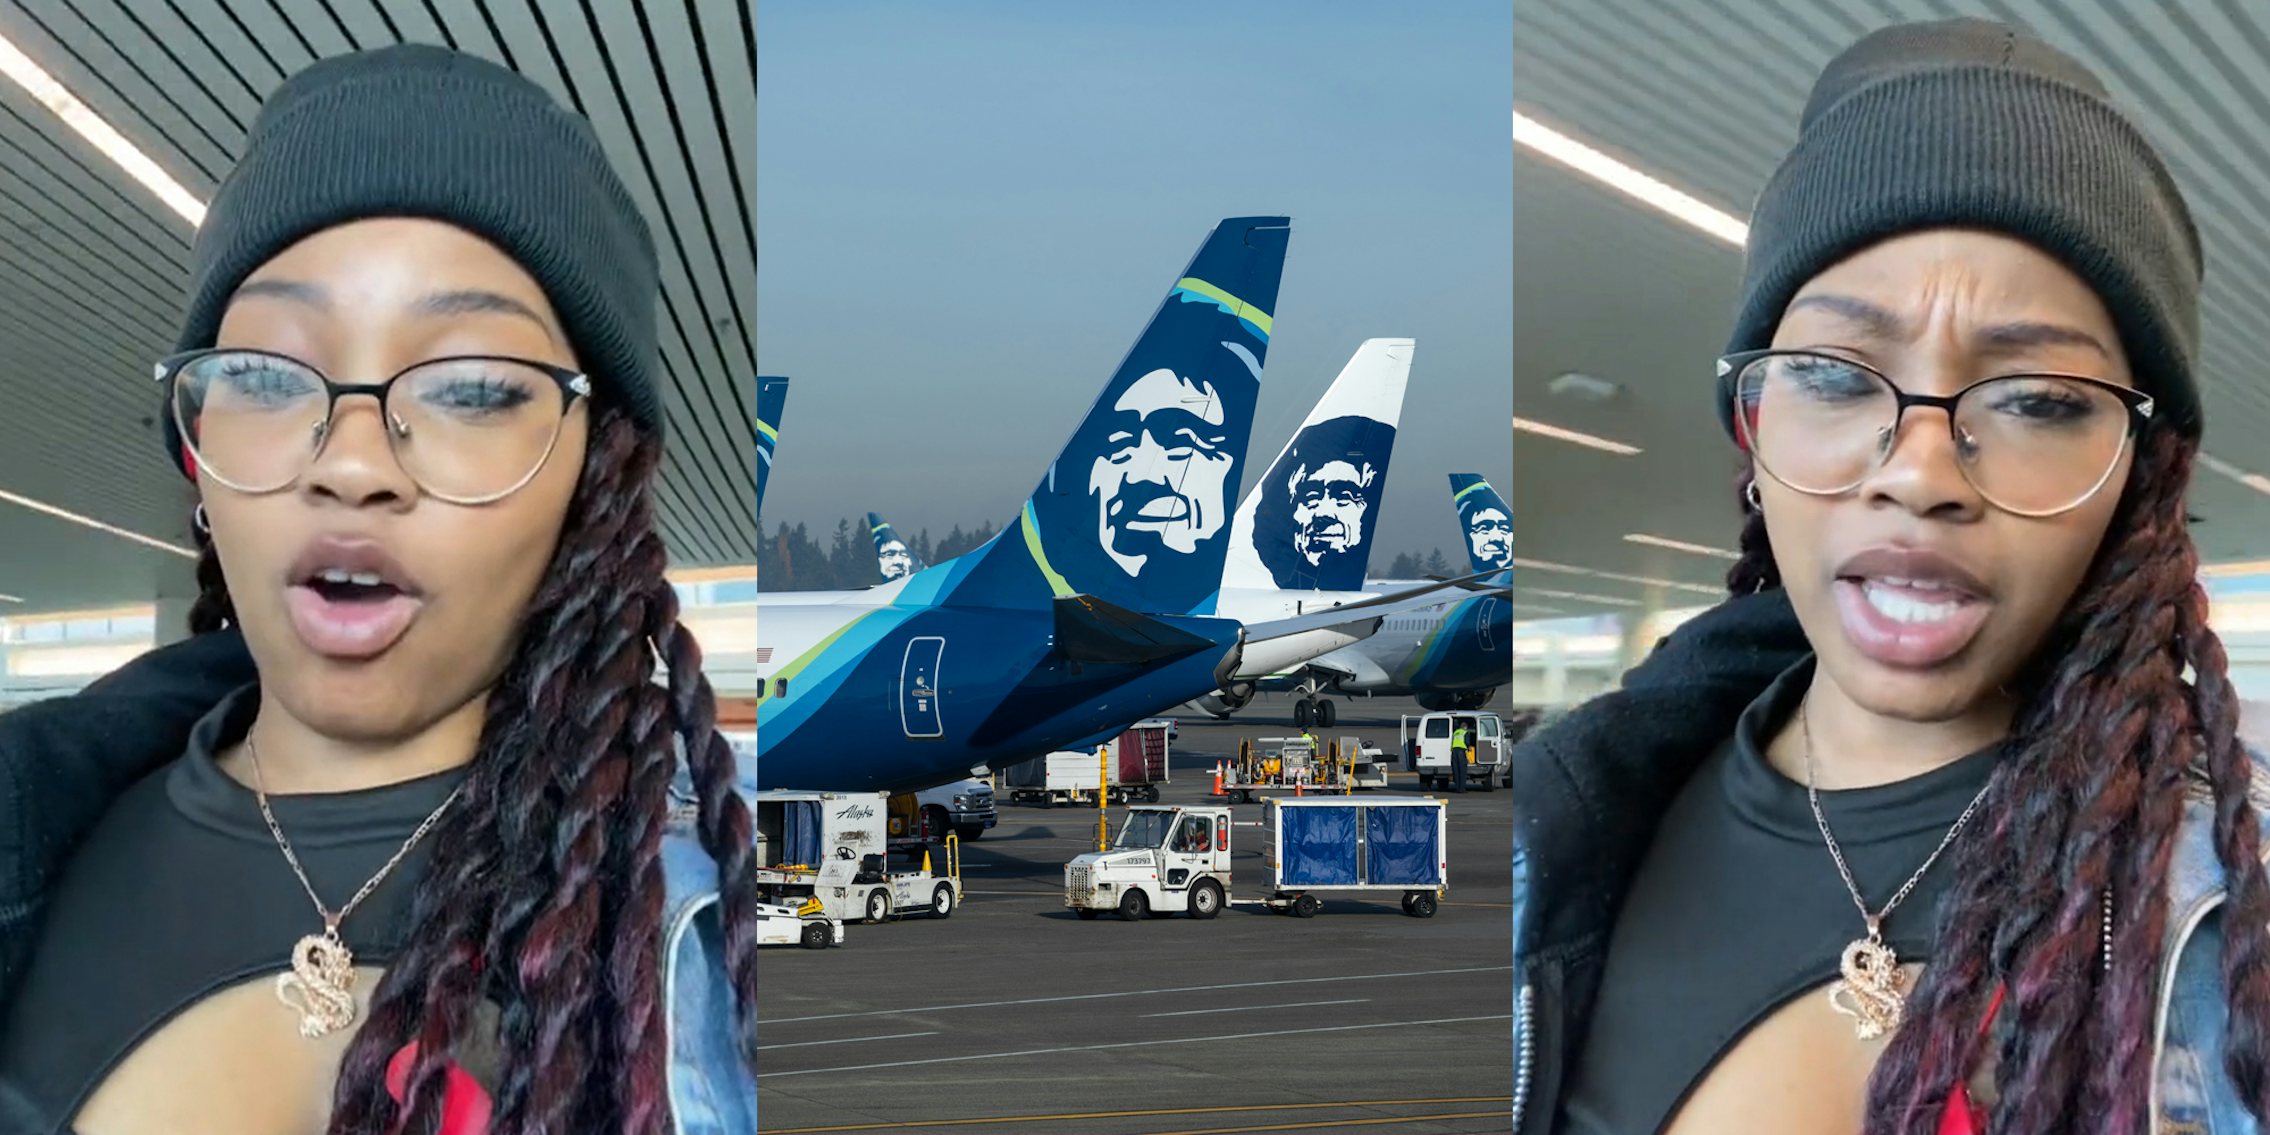 Alaska Airlines customer speaking (l) Alaska Airlines planes with decals on ends (c) Alaska Airlines customer speaking (r)